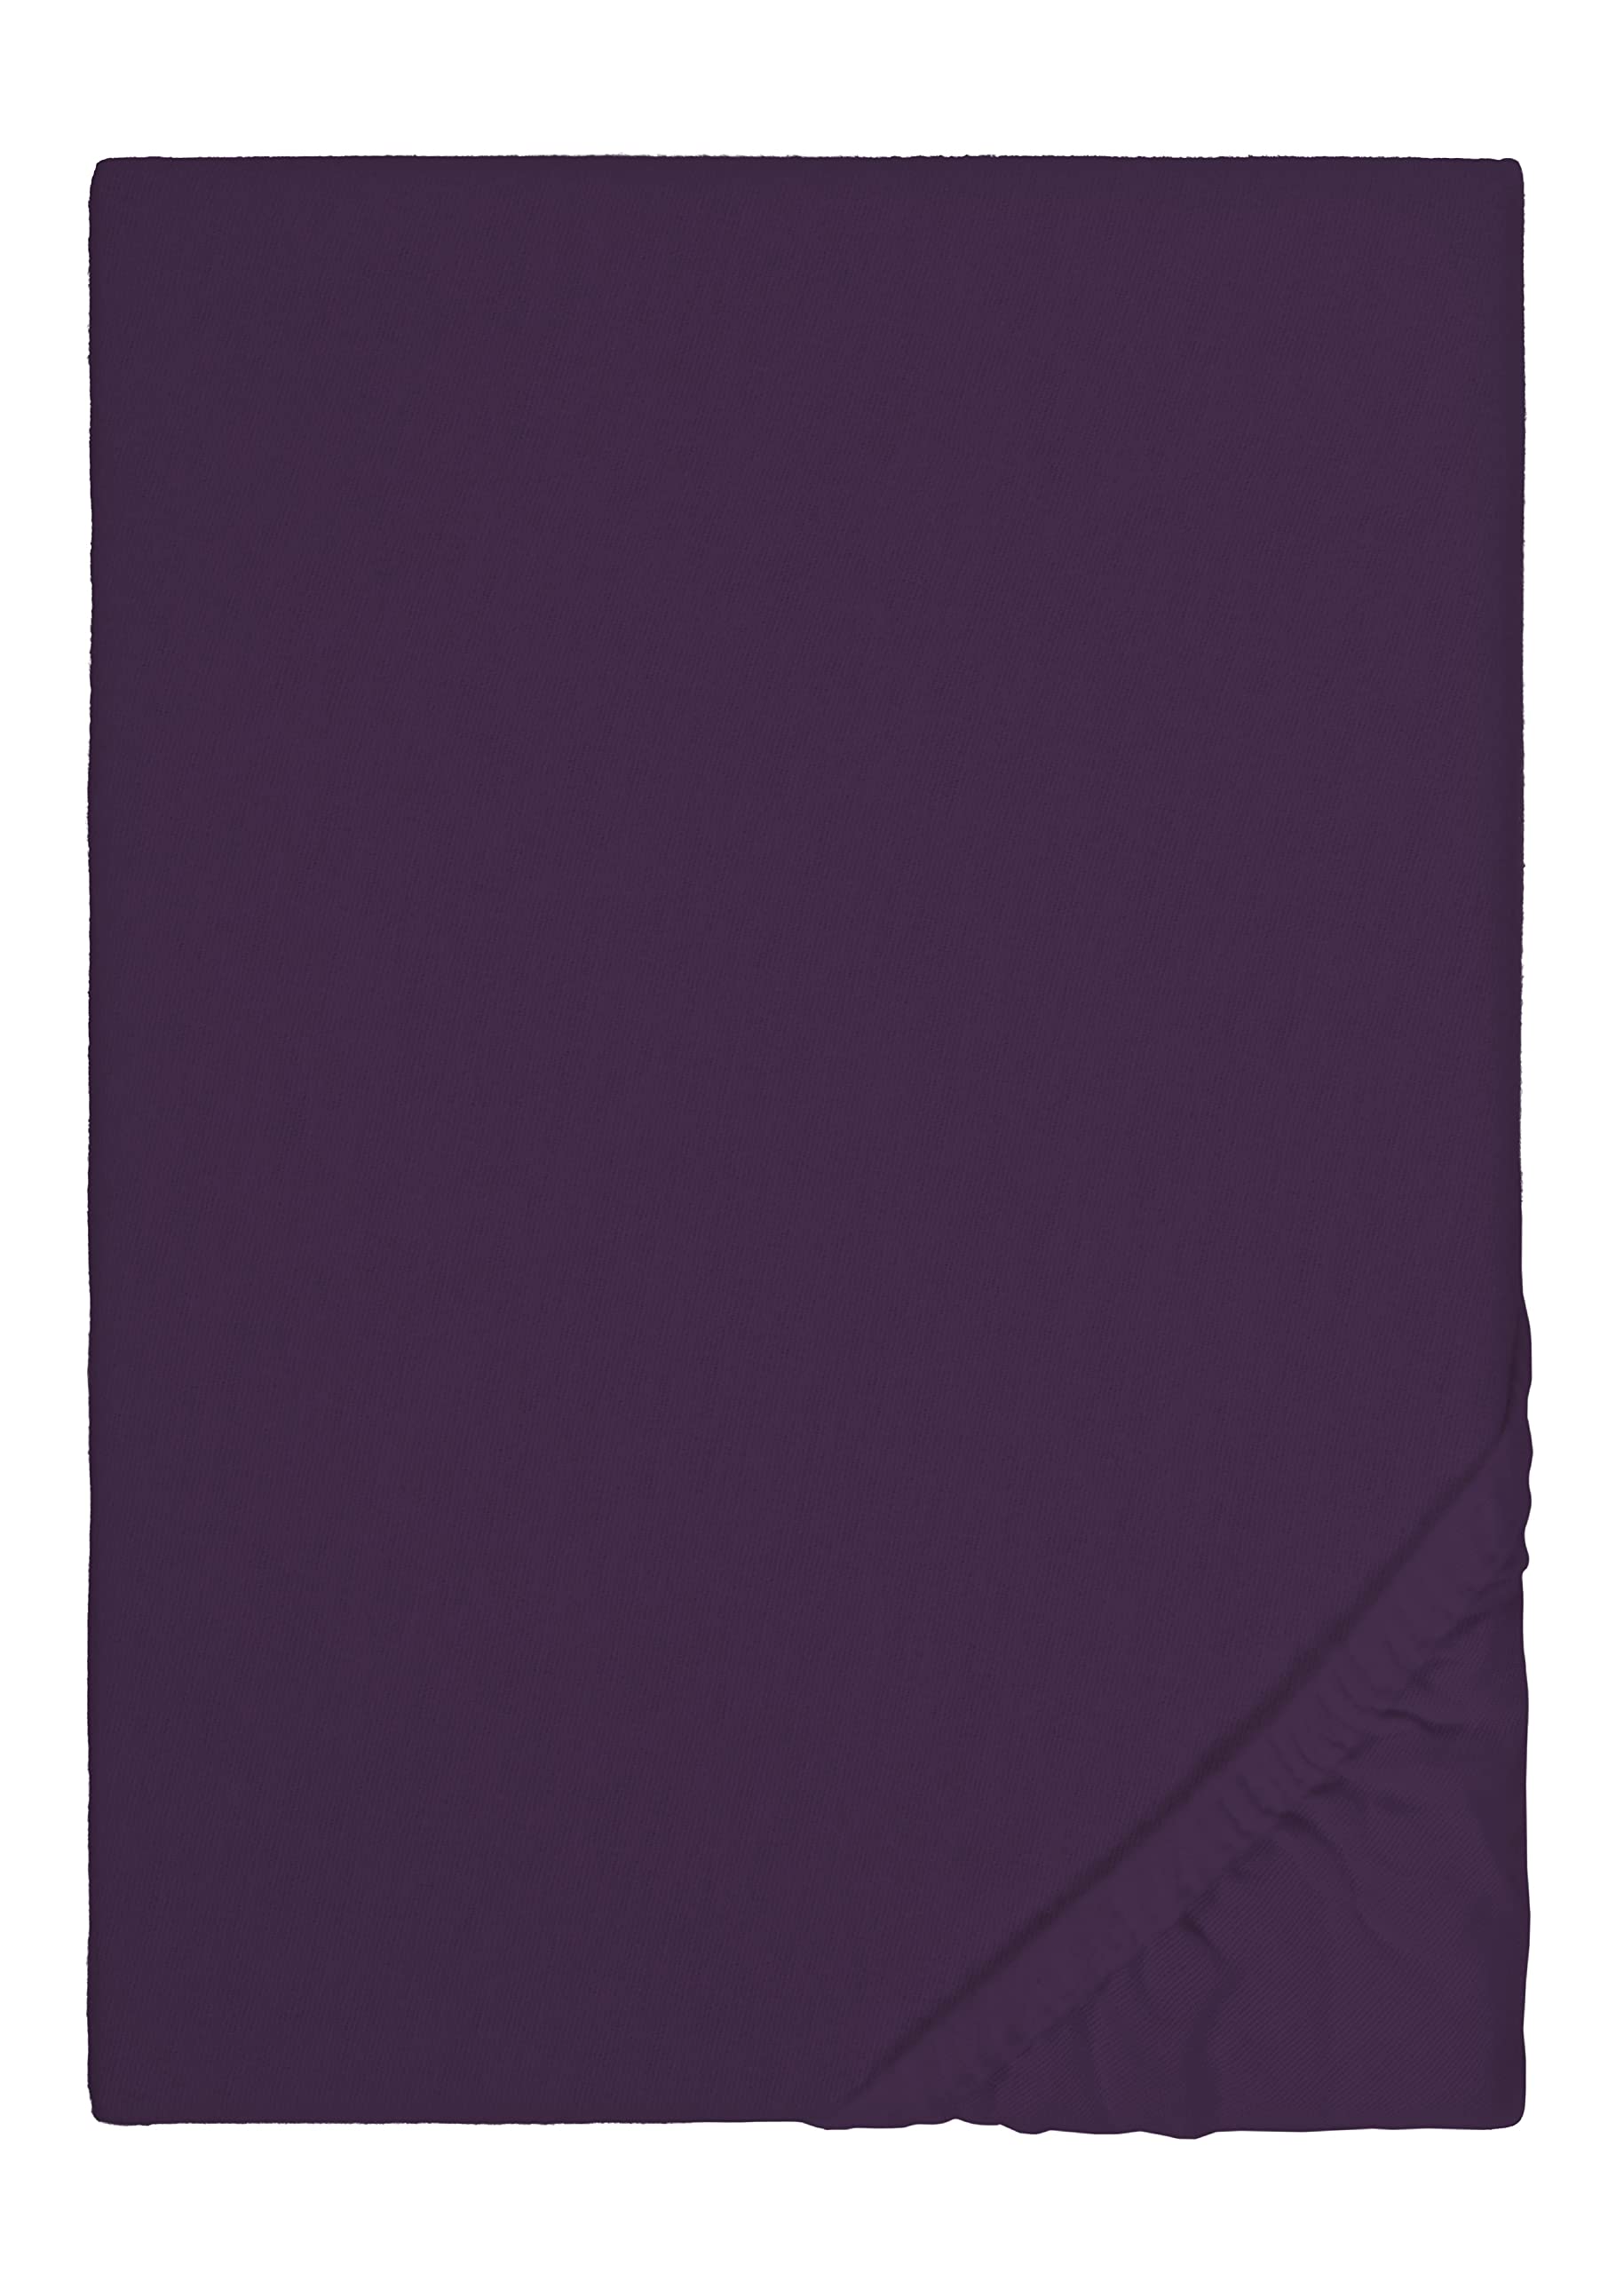 biberna Feinbiber-Spannbetttuch 0002744 dunkel violett 1x 140x200 cm - 160x200 cm